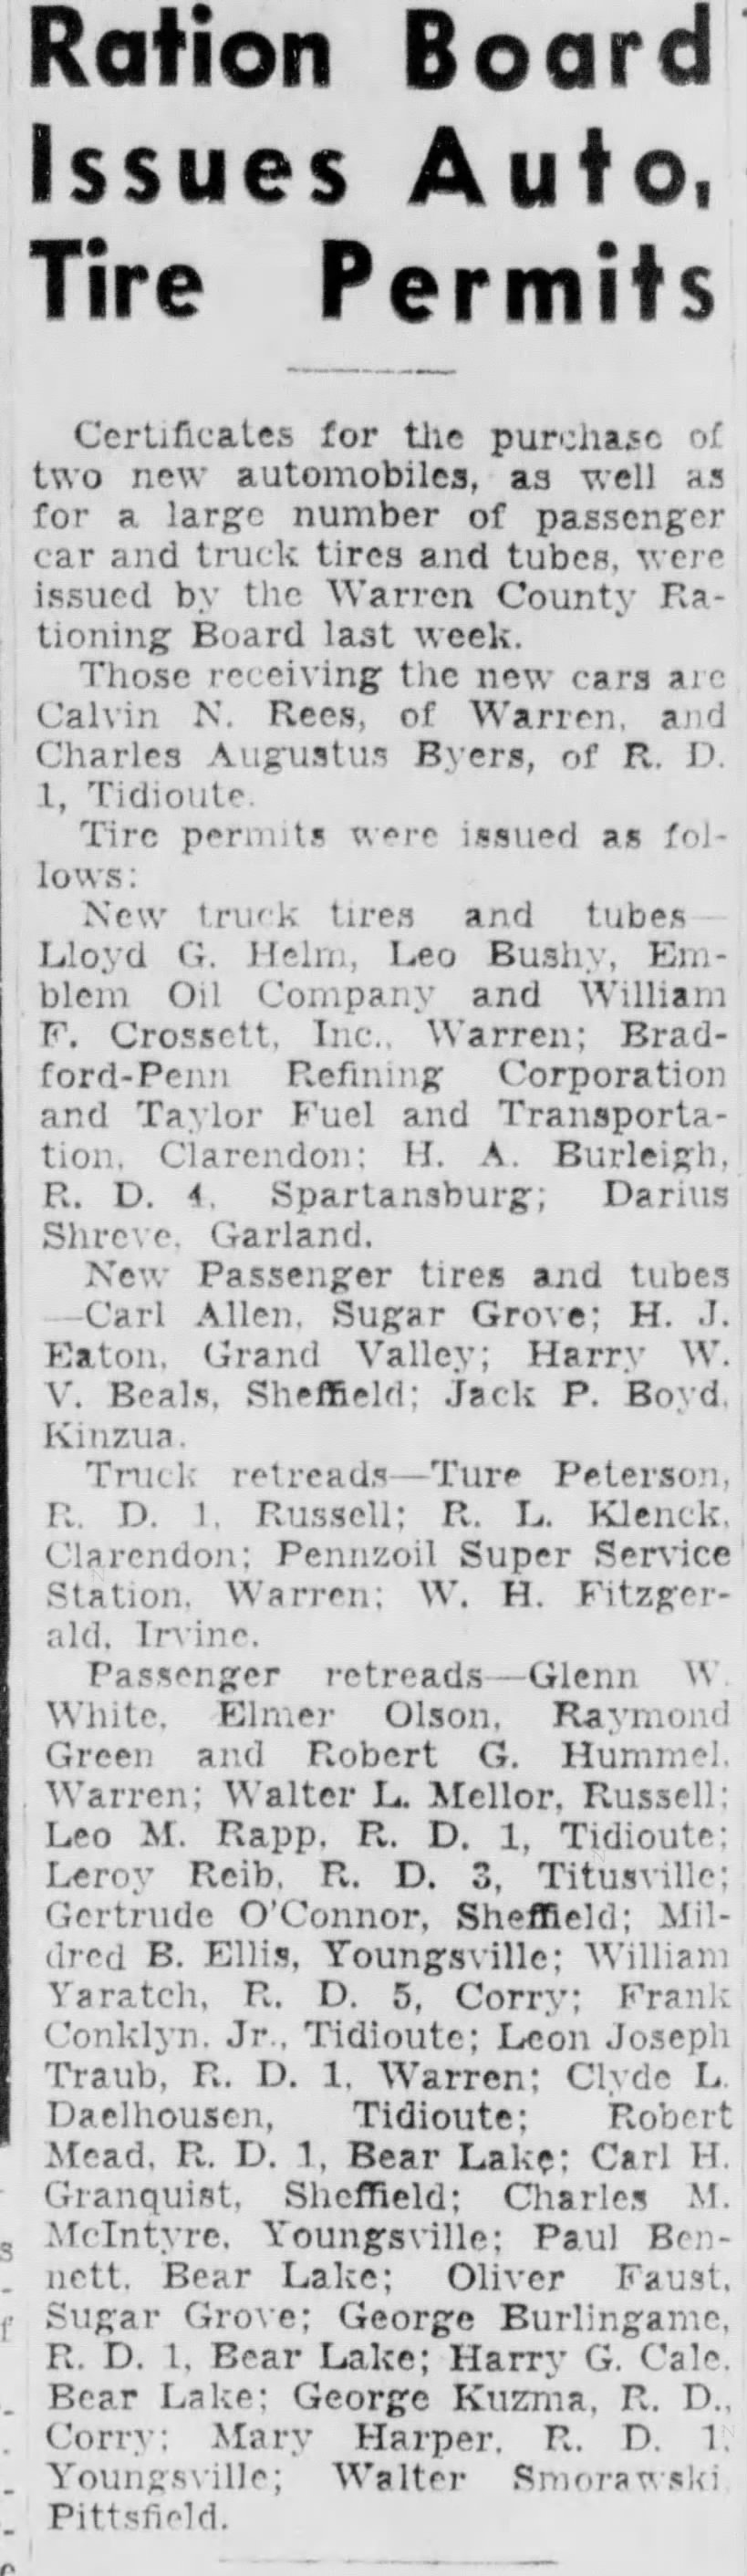 Byers, Charles Augustus
Warren Times Mirror Warren, PA 
2 Jun 1942